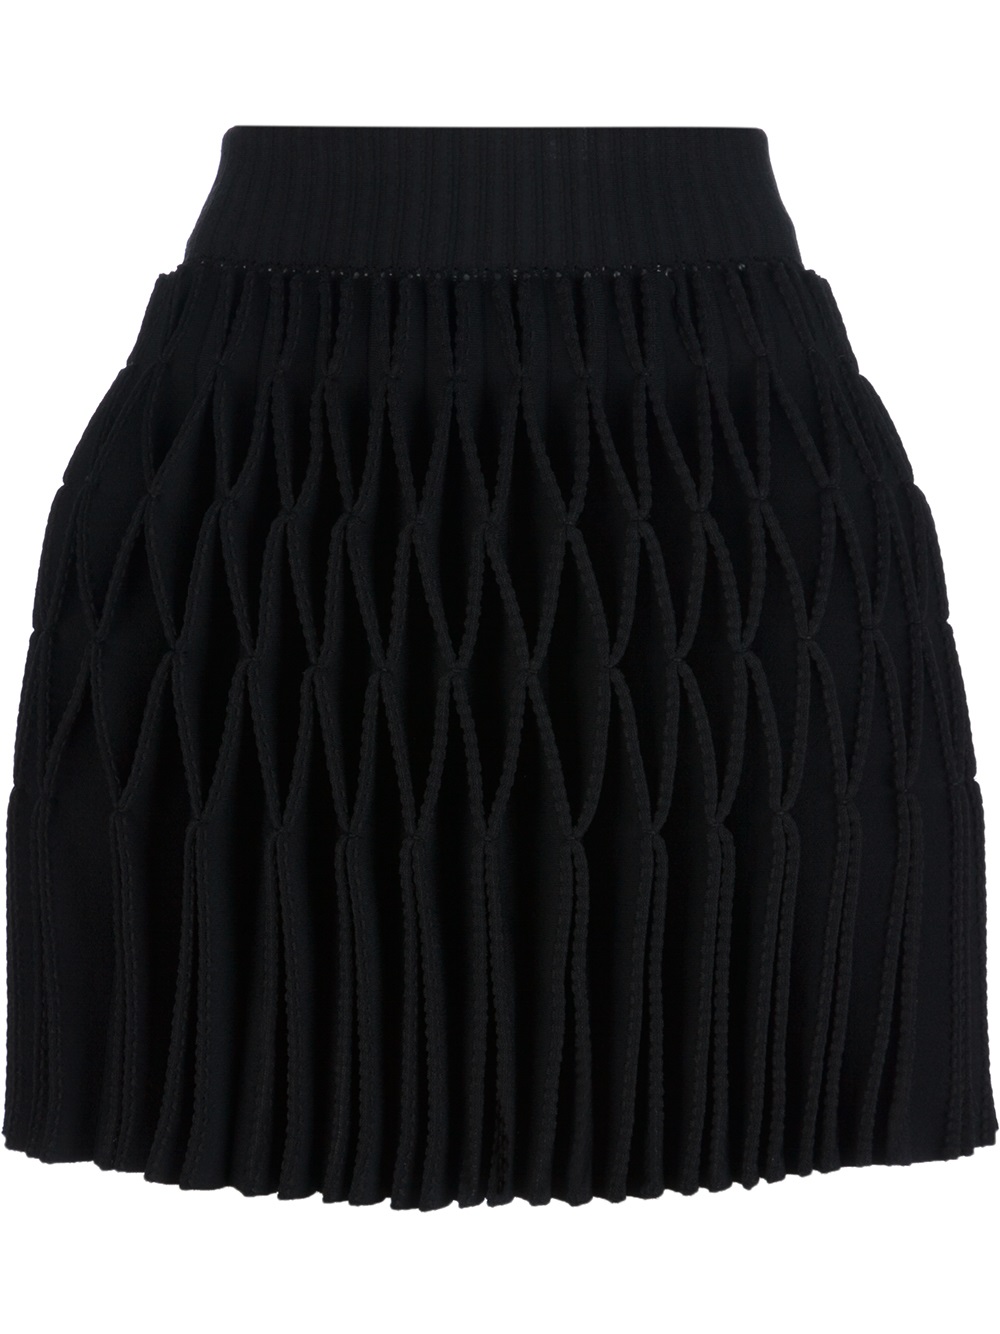 Alaïa Honeycomb Pleat Skirt in Black - Lyst